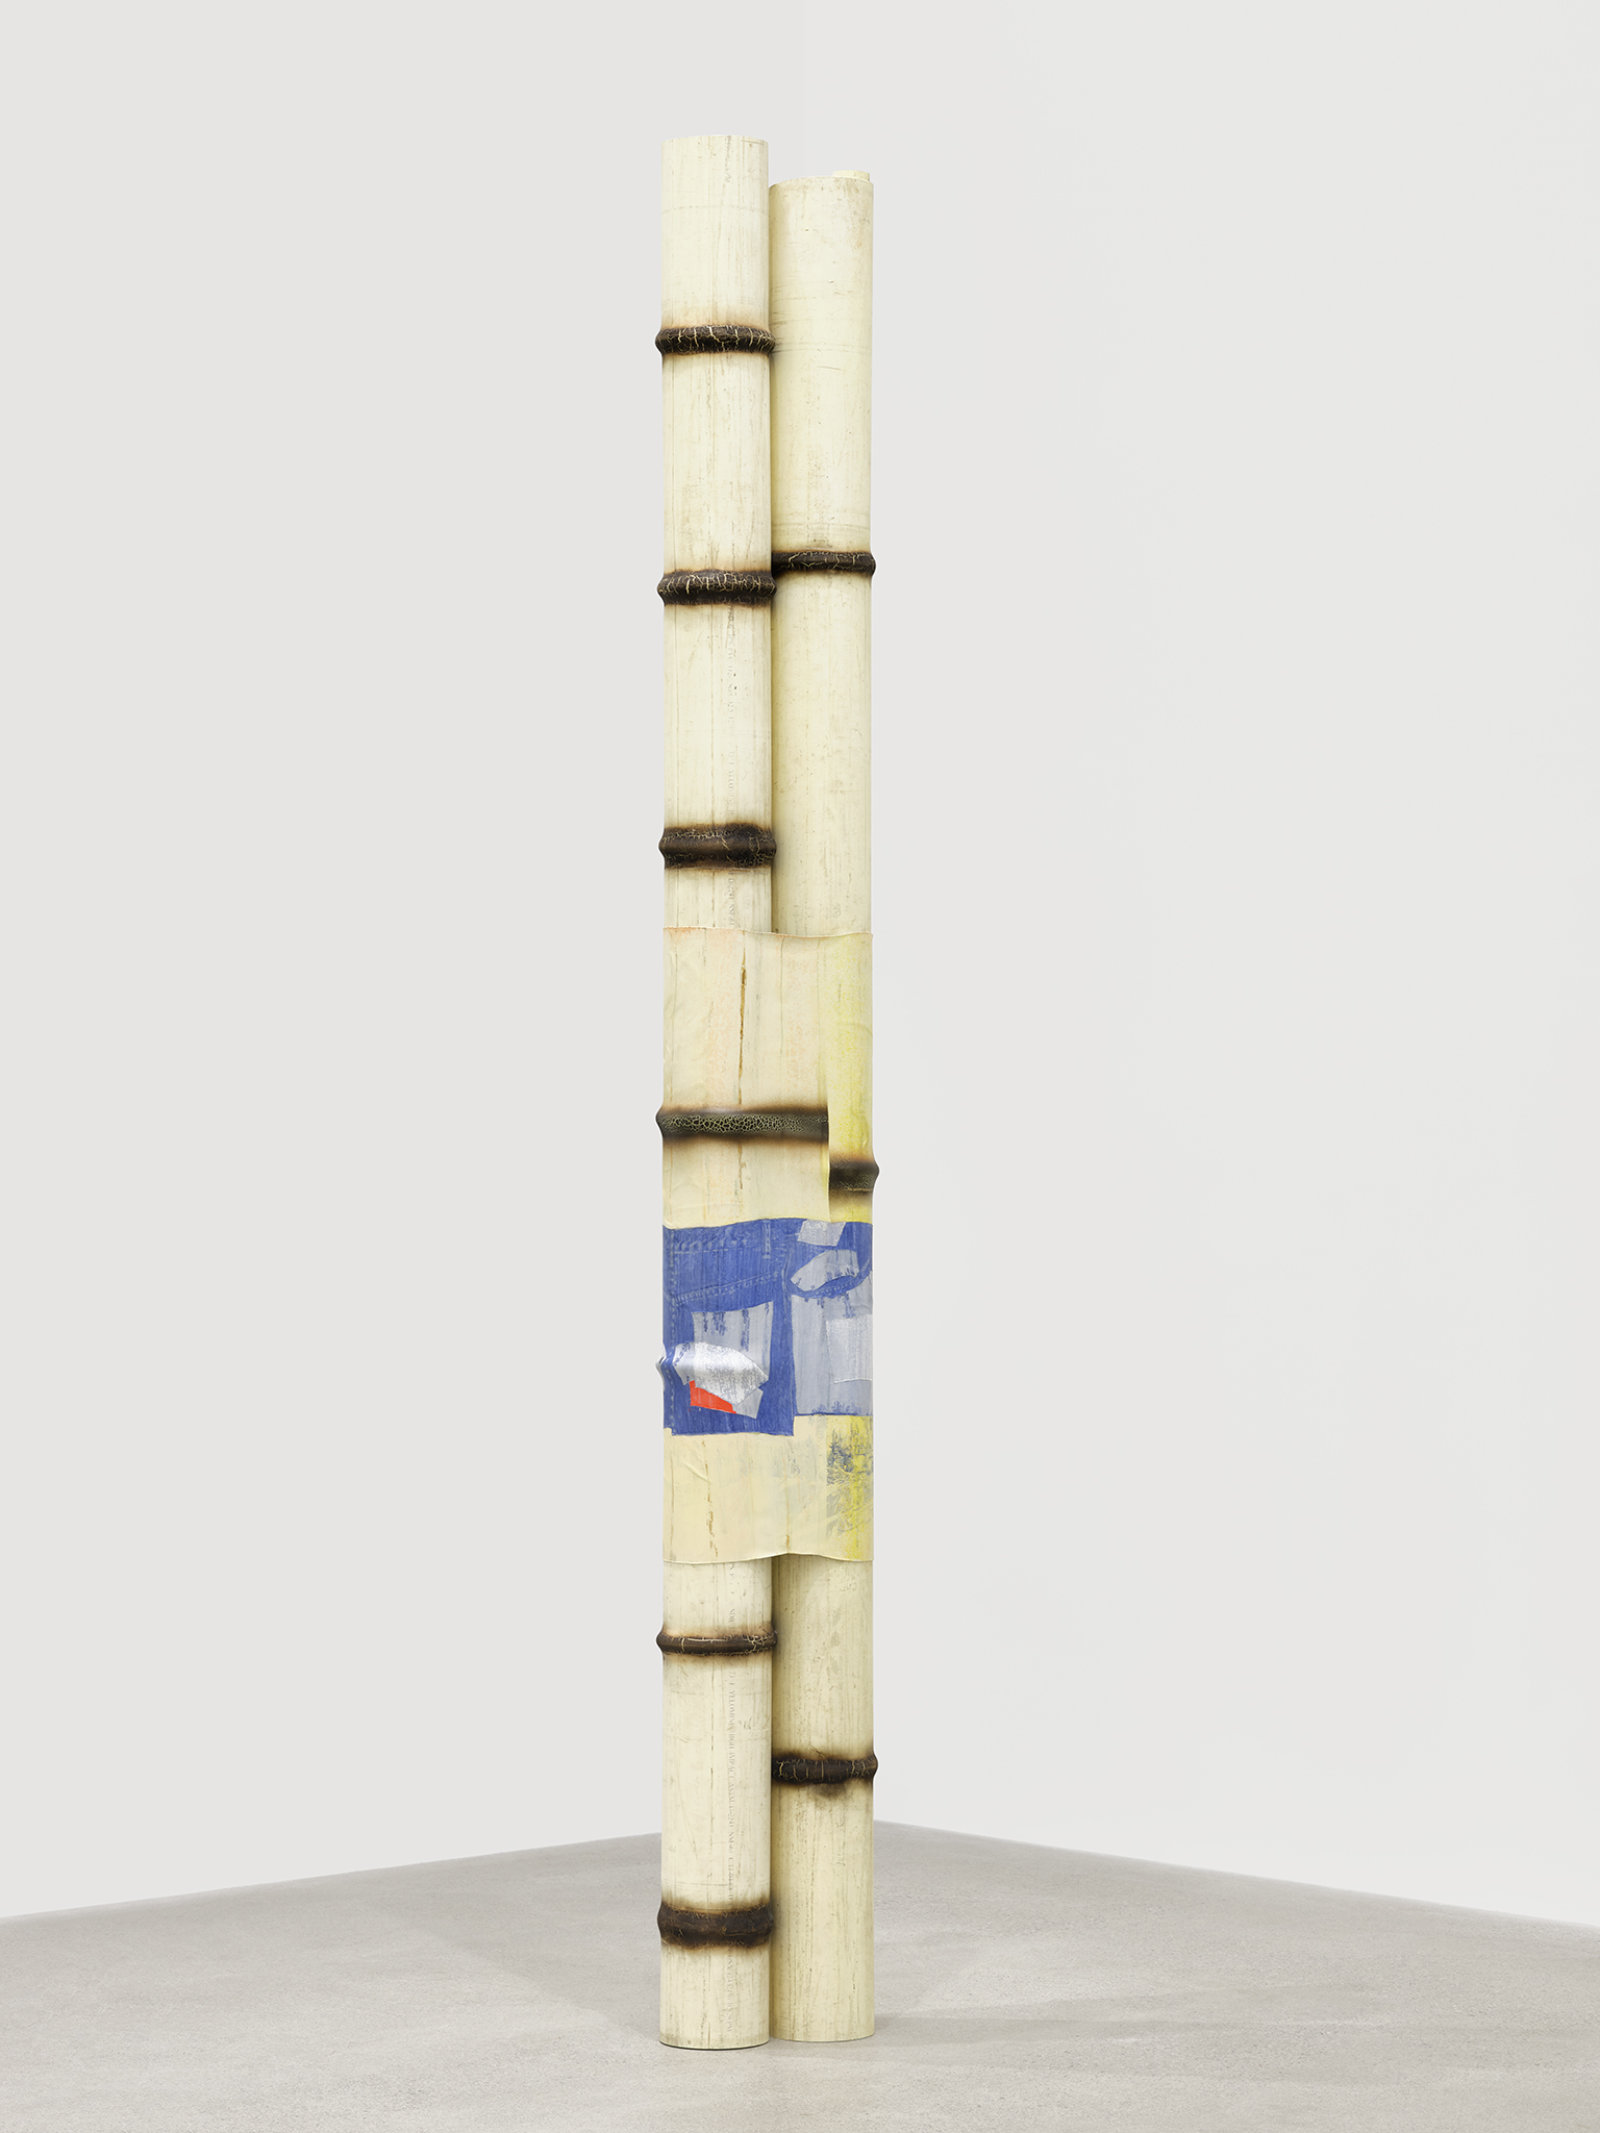 Valérie Blass, L’homme augmenté, 2019, pvc pipe, heat-shrink tubing, acrylic paint, 117 x 15 x 12 in. (296 x 38 x 24 cm)